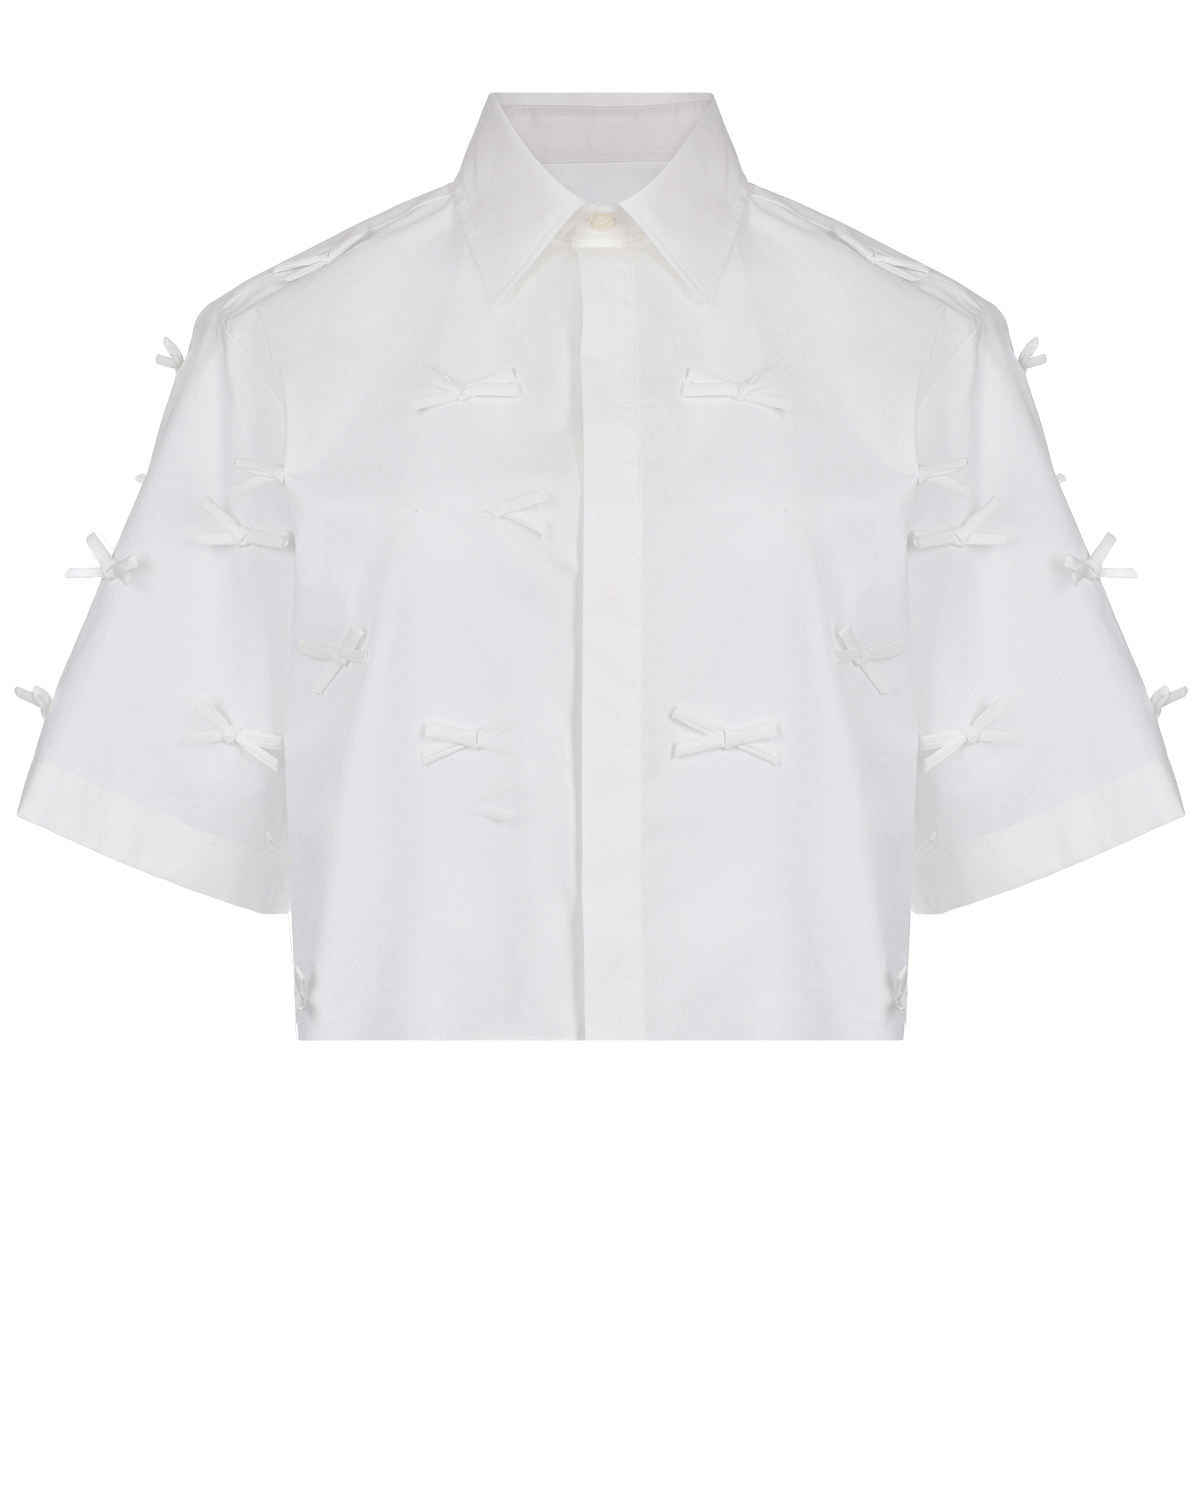 Белая рубашка с бантами MSGM, размер 40, цвет белый - фото 1